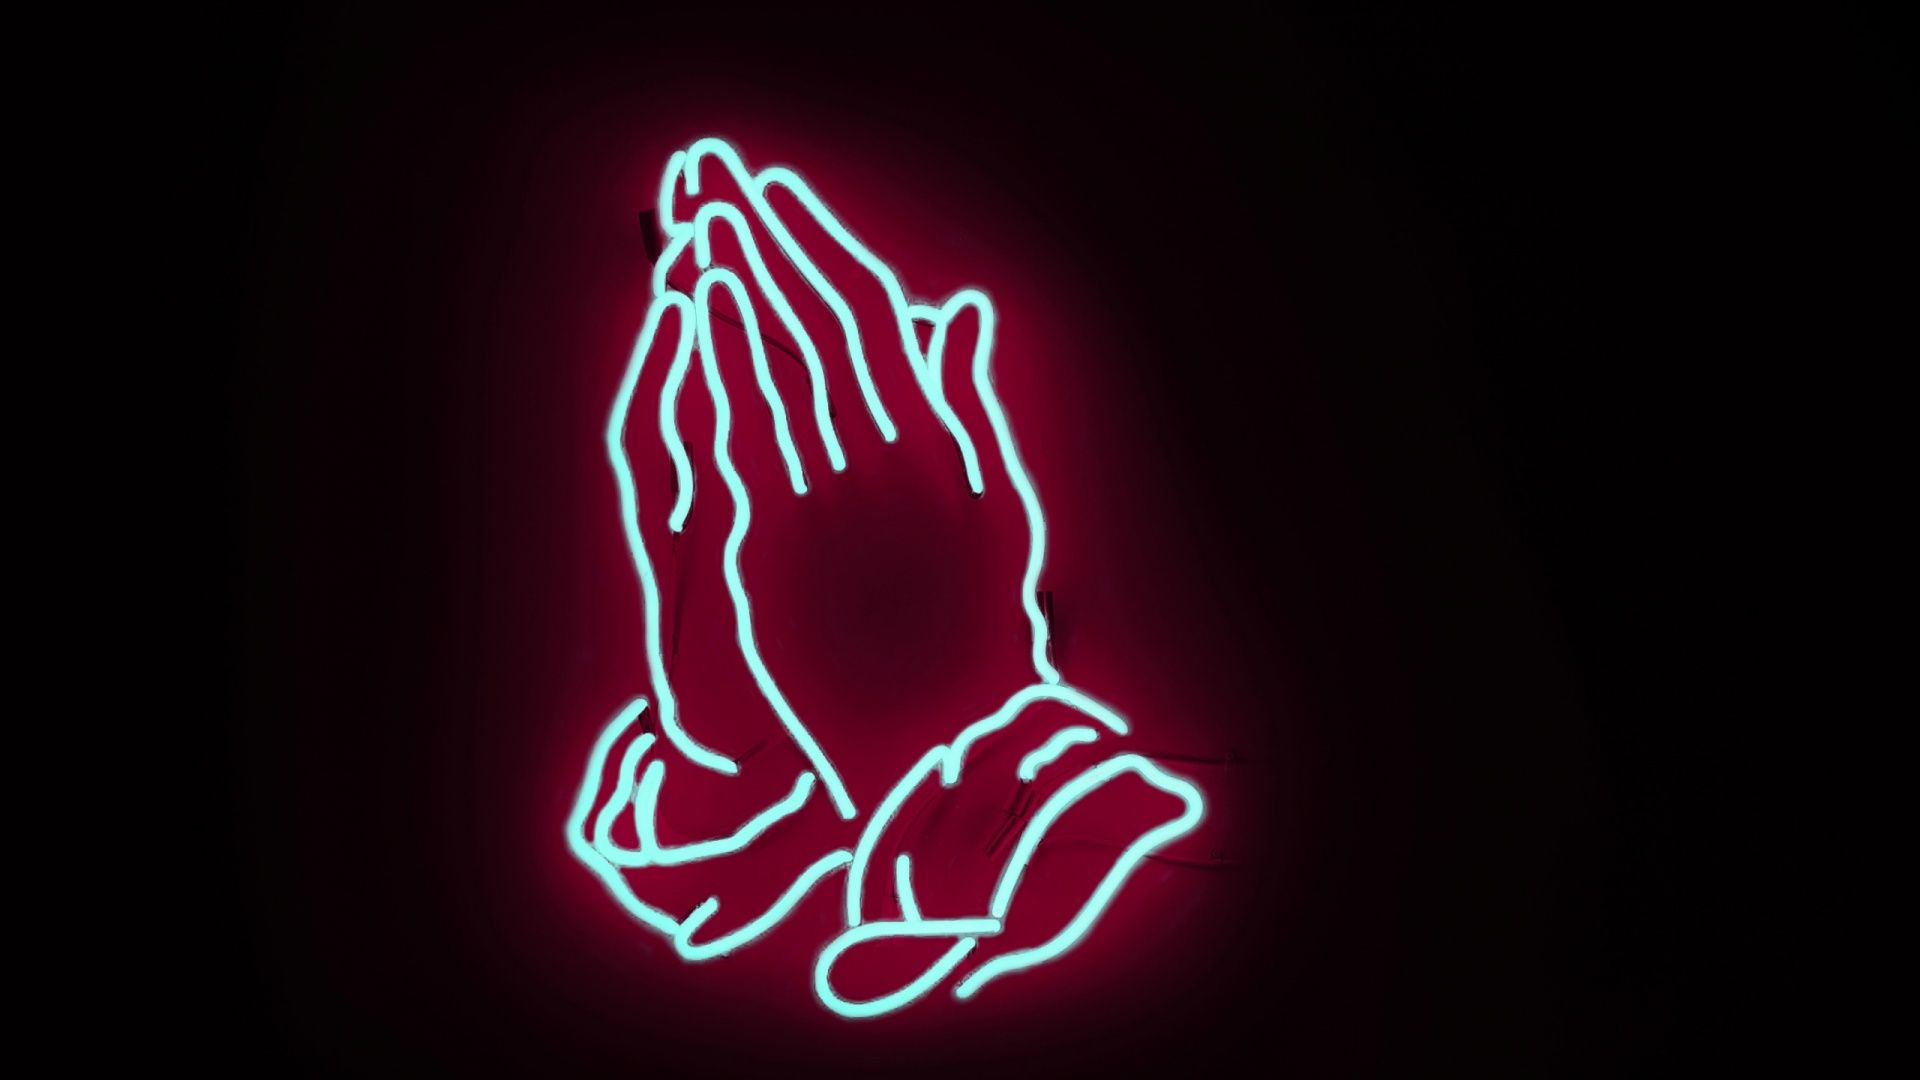 Neon Hands Prayer Desktop Pc And Mac .wallpapertip.com